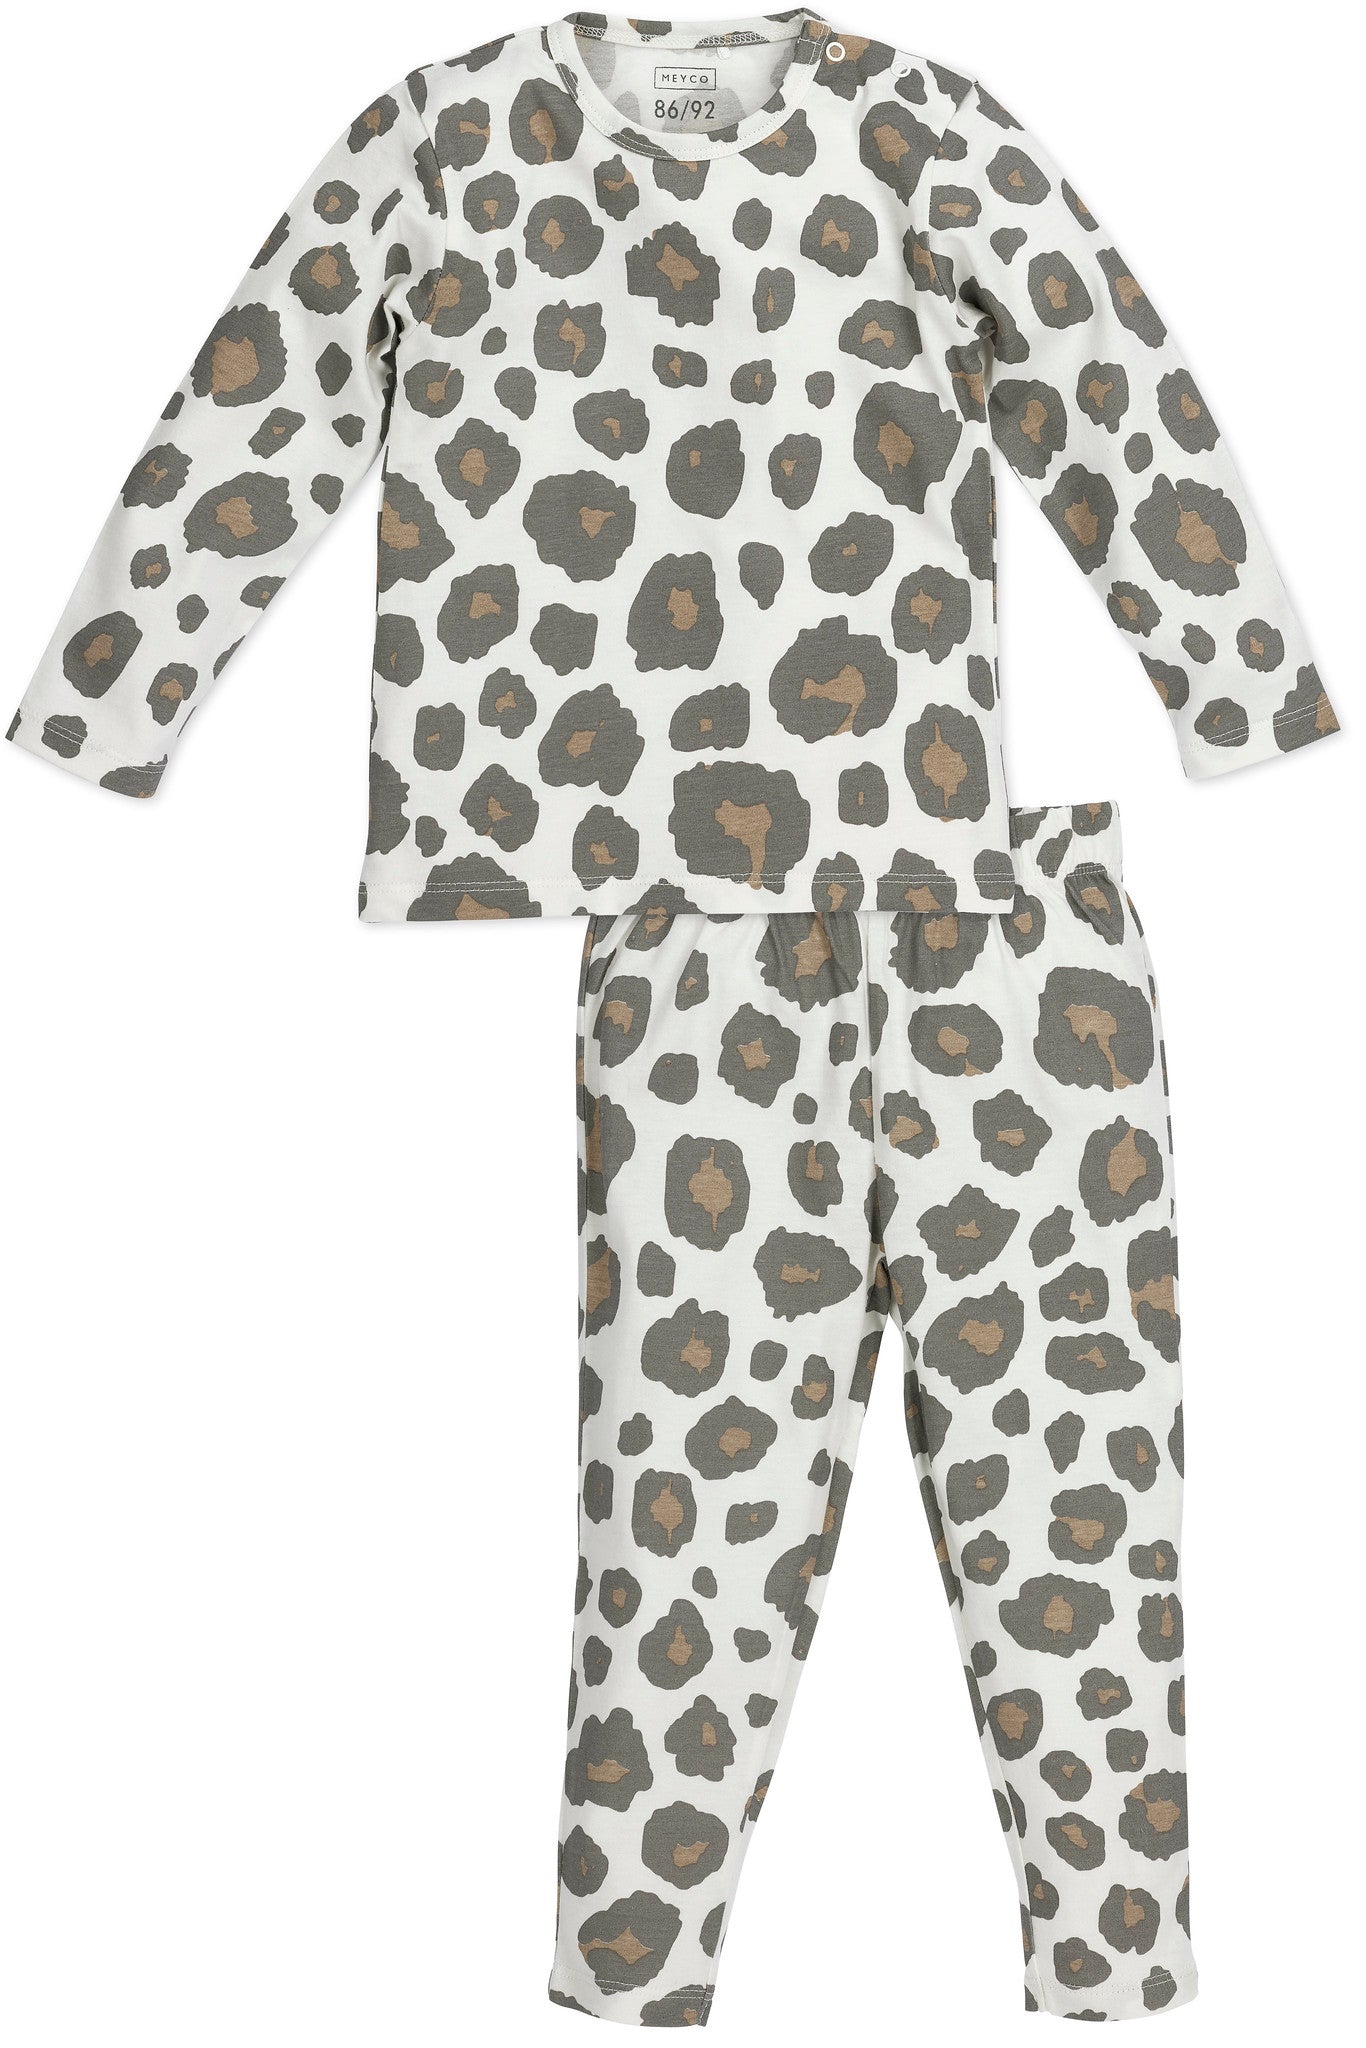 Pajama Panther - size 50/56